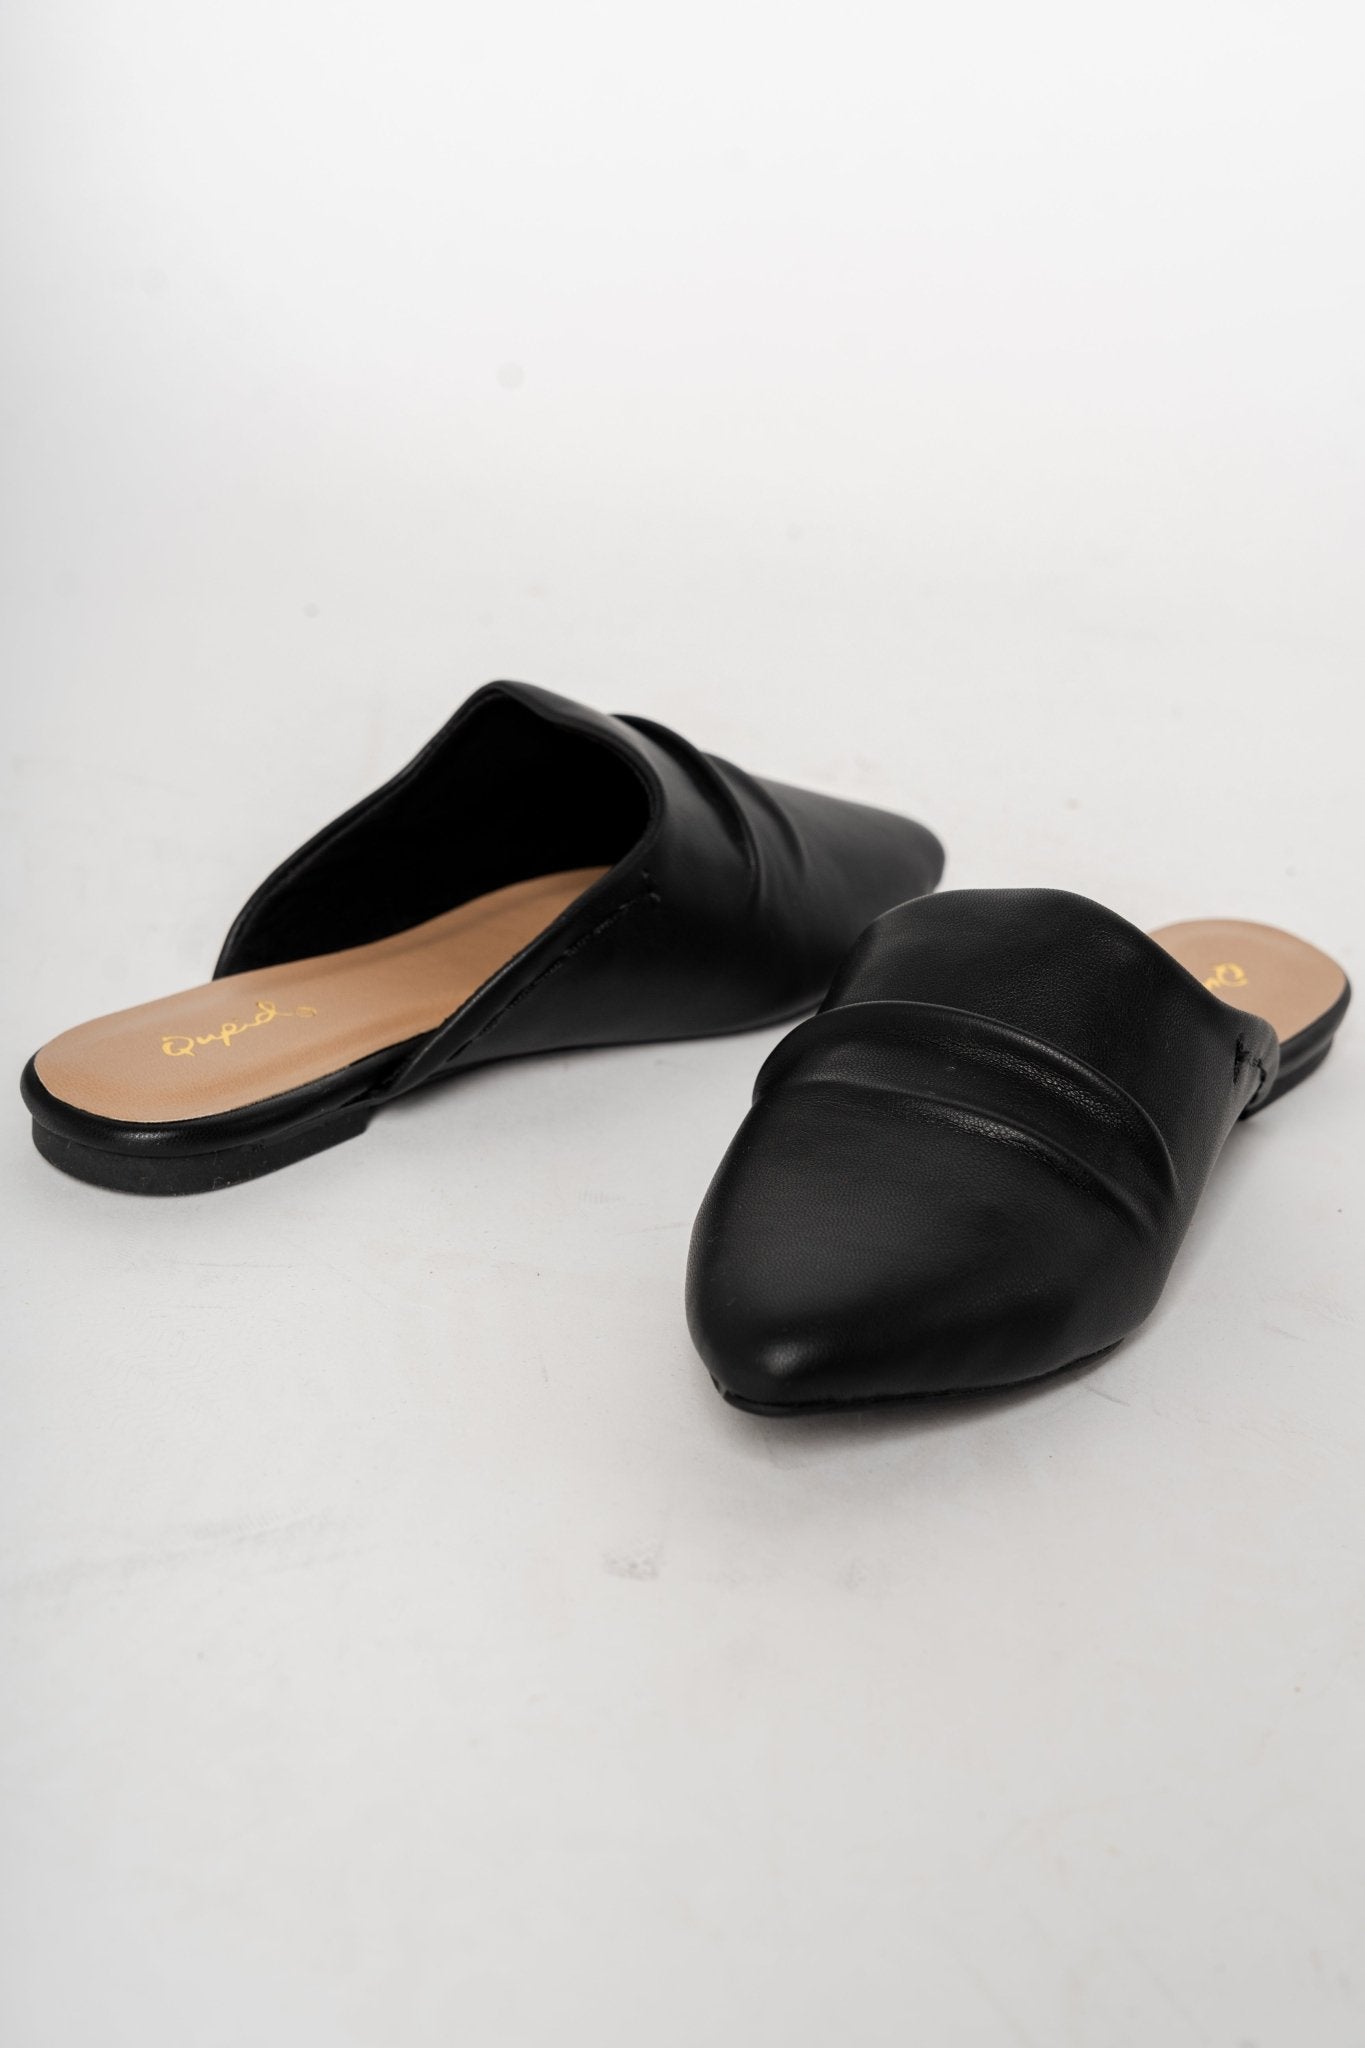 Swirl mule ballerina flat black Stylish shoes - Womens Fashion Shoes at Lush Fashion Lounge Boutique in Oklahoma City